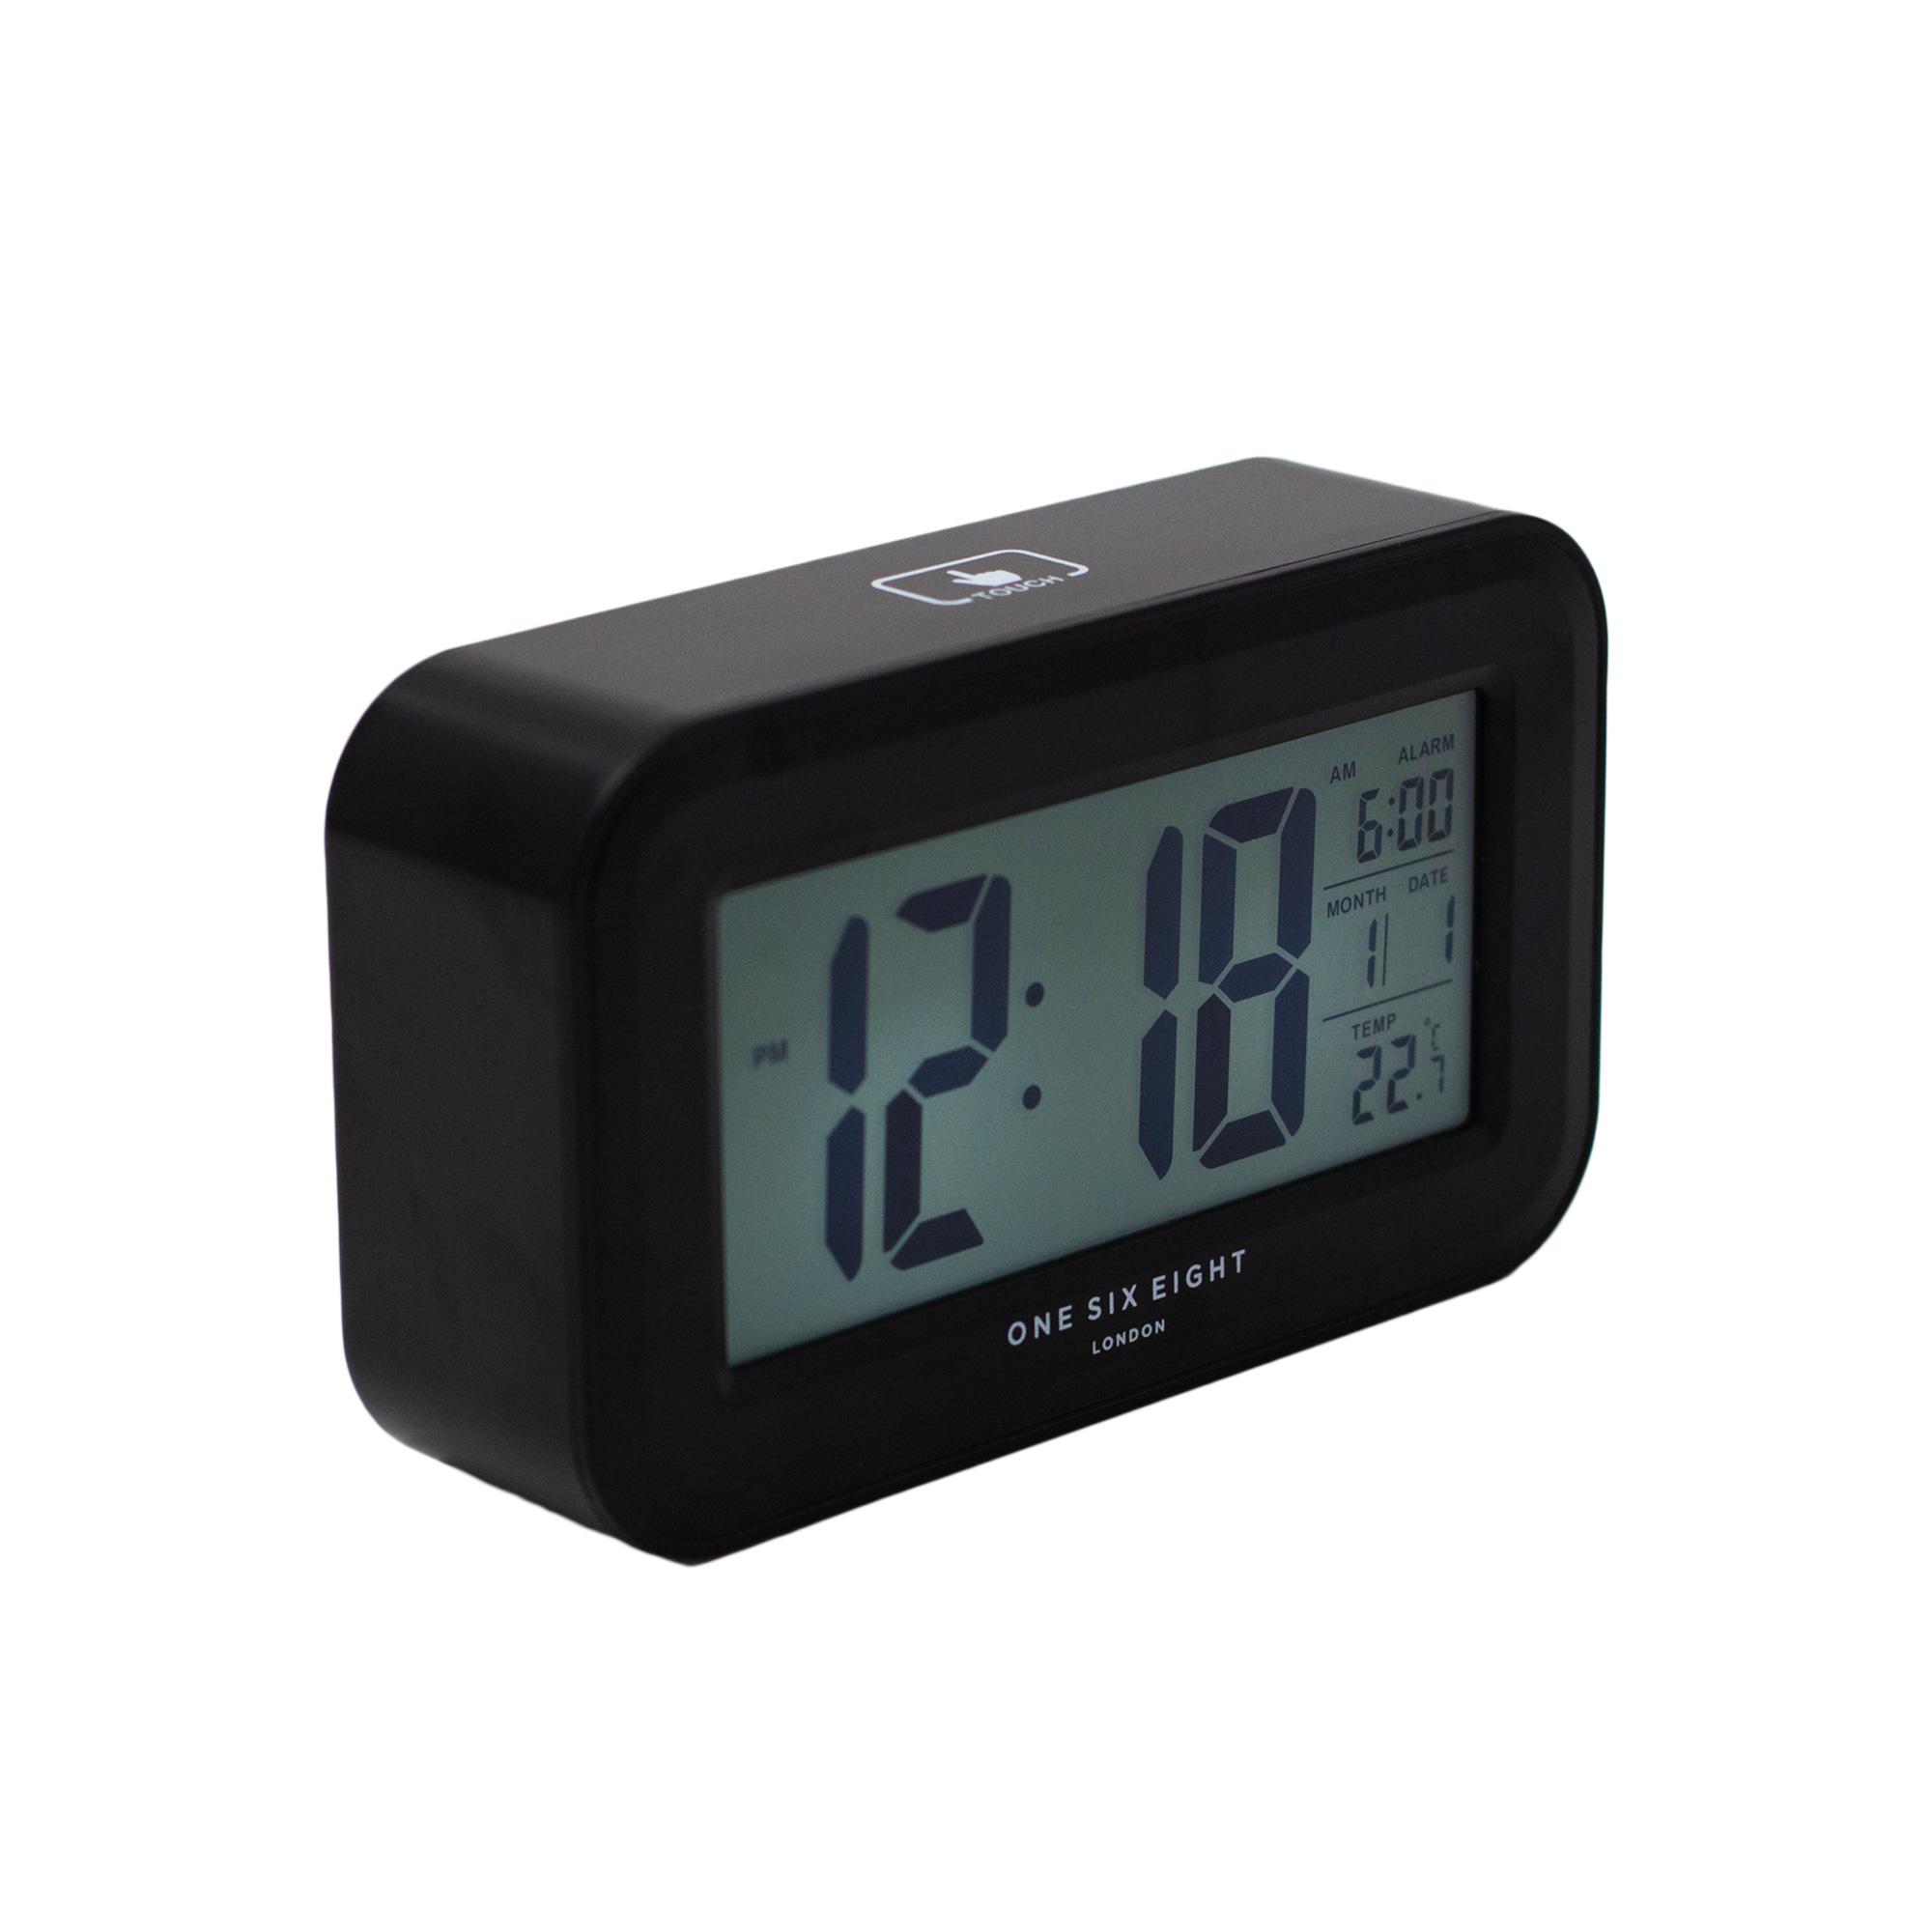 One Six Eight London Reilly Digital Alarm Clock Black Image 3